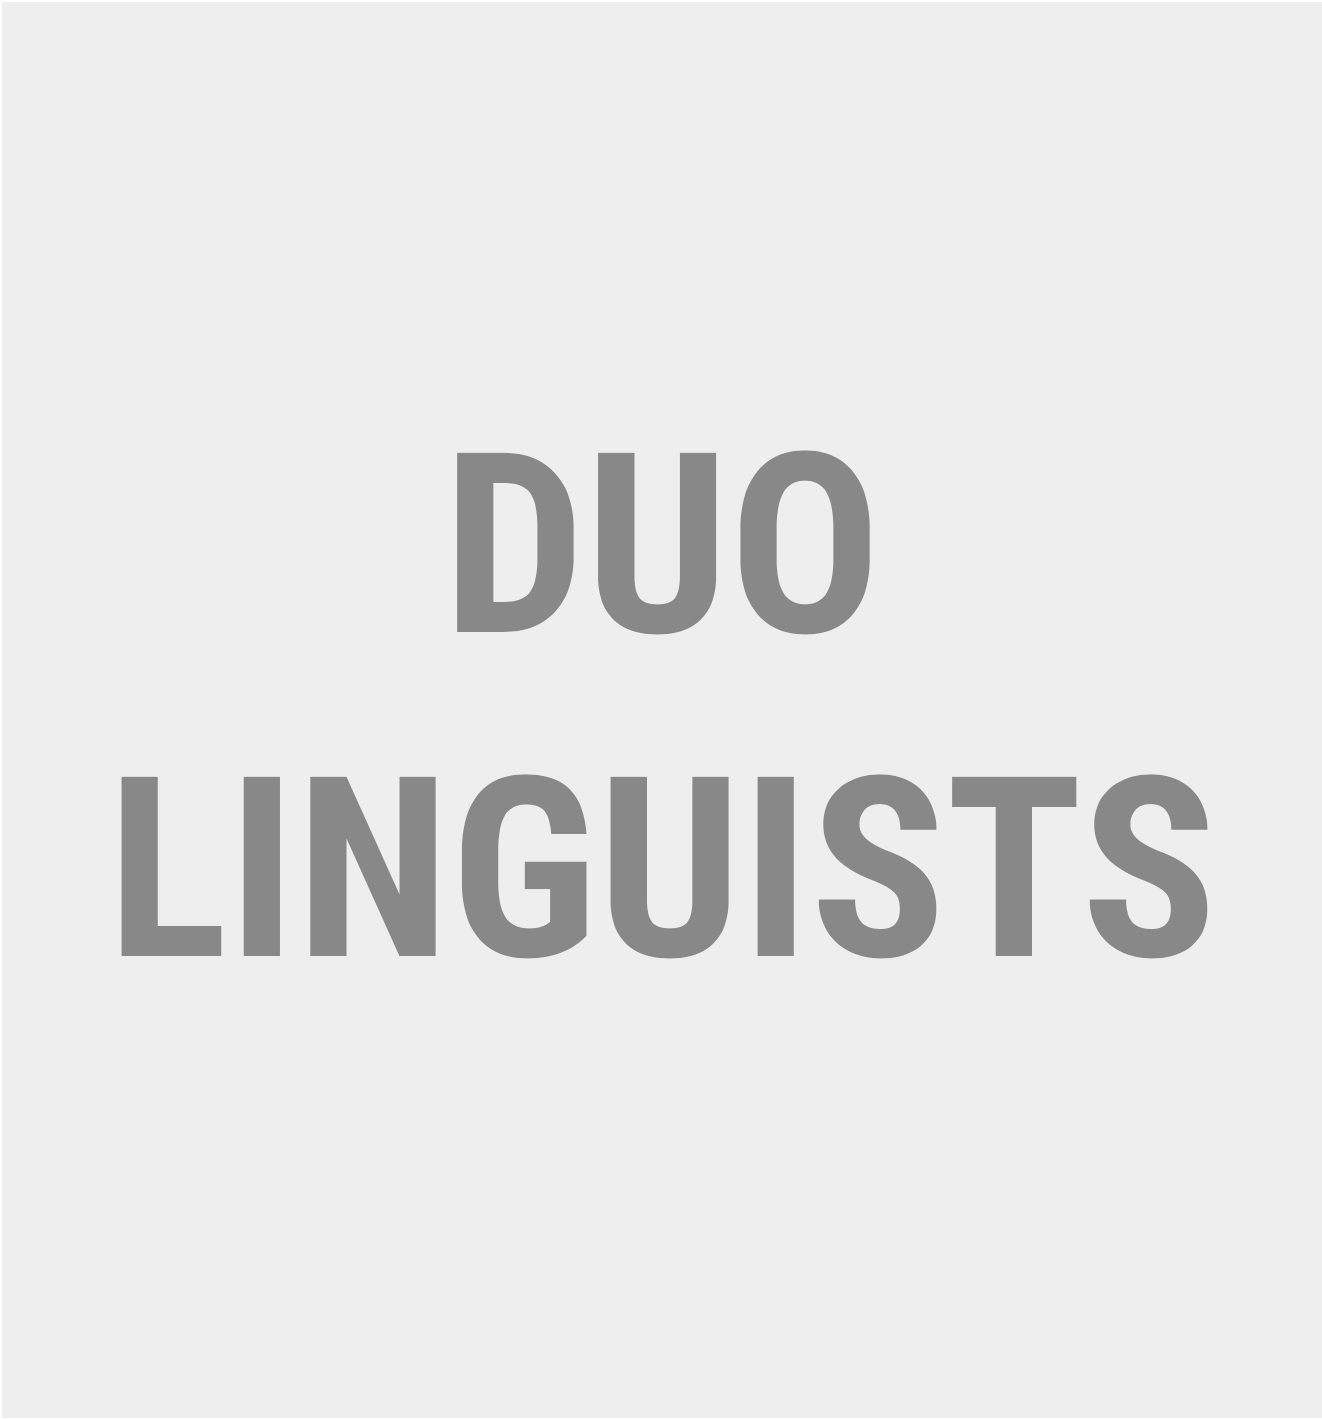 Duolinguists